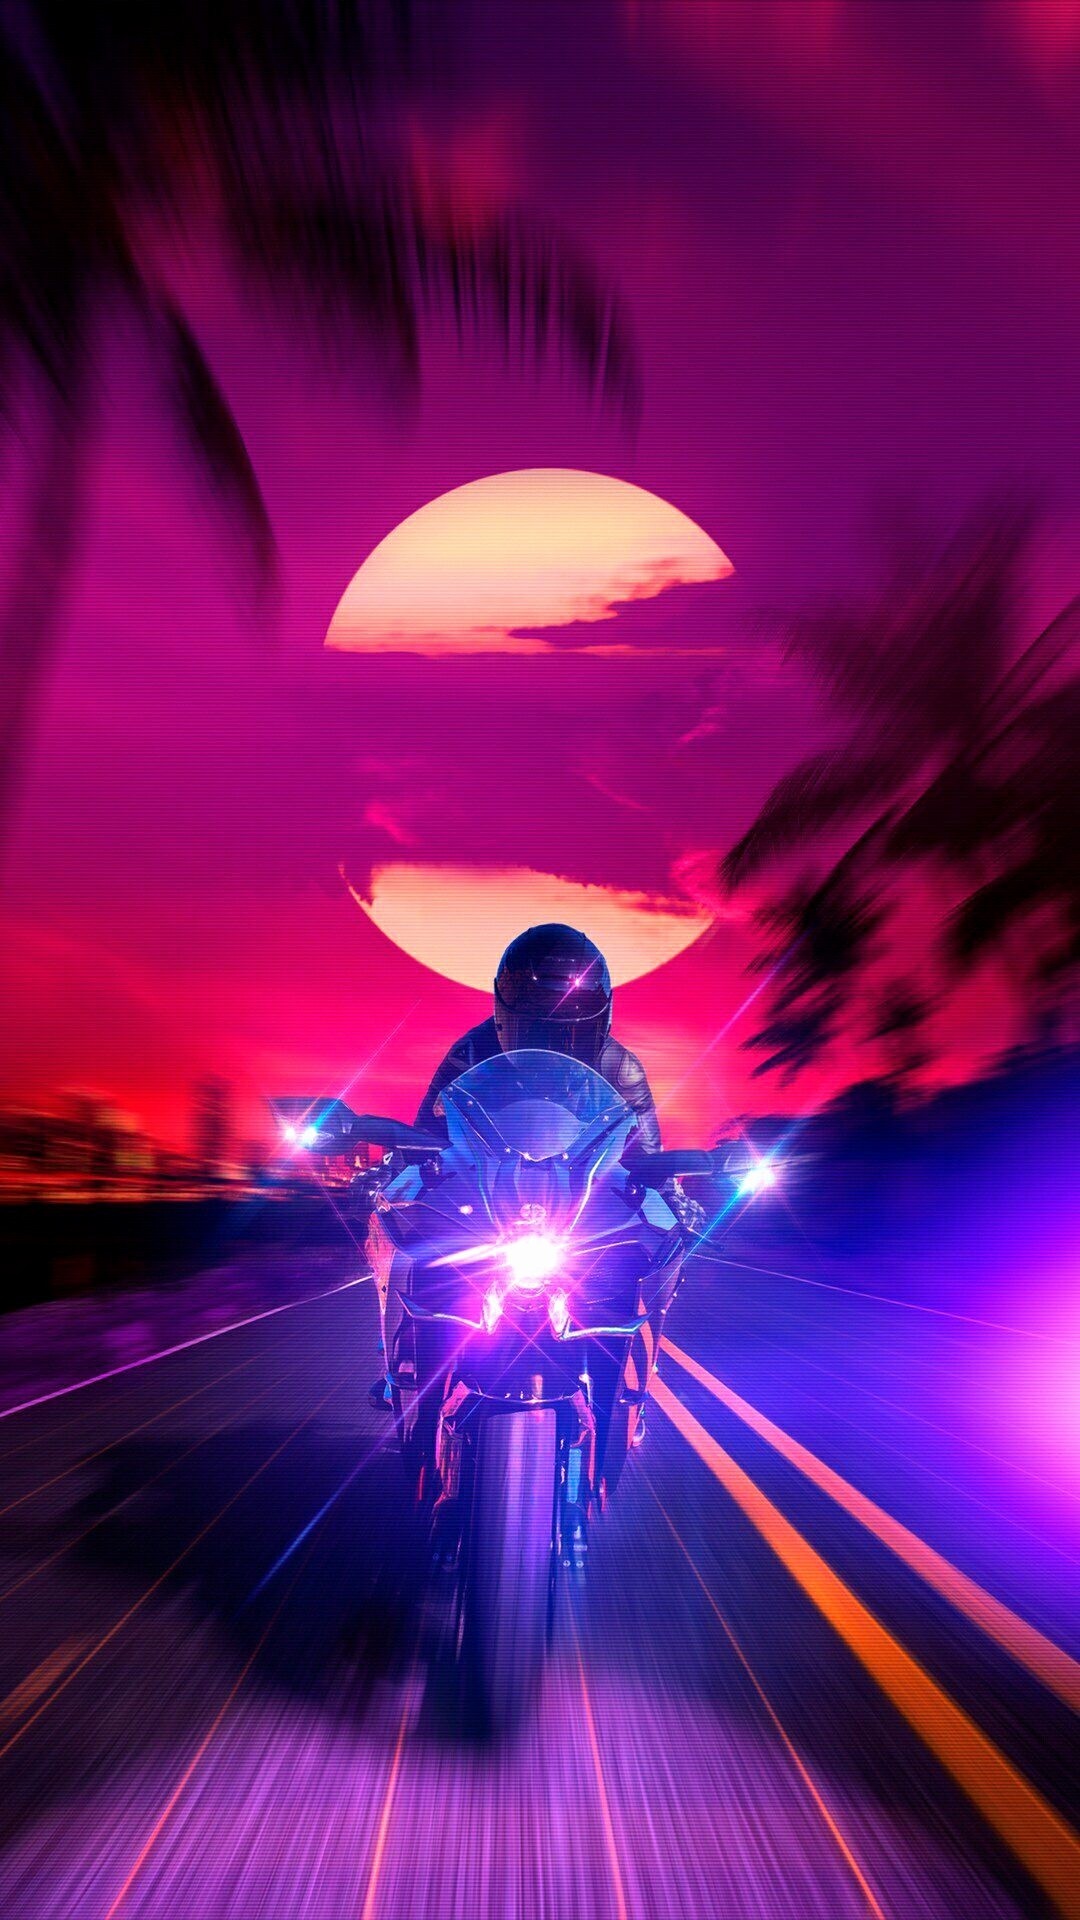 1080x1920 ... Neon Wallpaper iPhone Best Of Bike Sunset Bikes In 2018 Pinterest ...